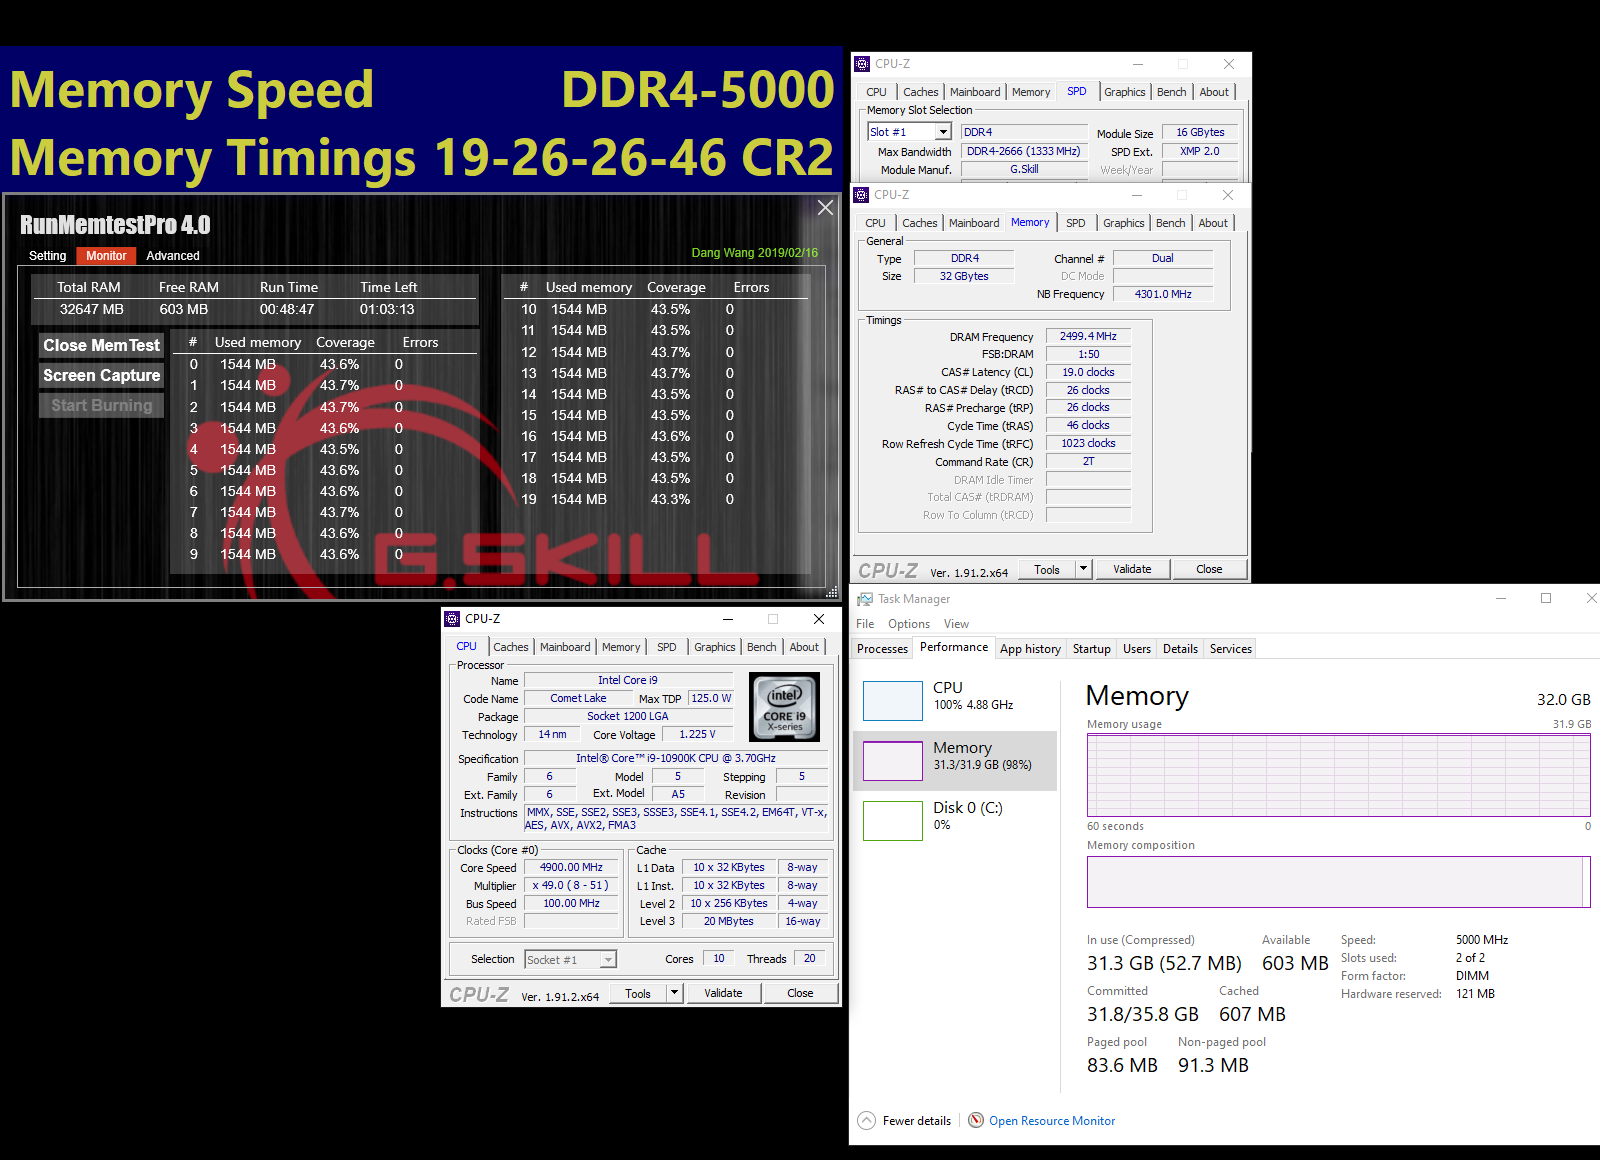 04 5000 c19 26 26 46 16gx2 G.SKILL เปิดตัวแรม DDR4 รุ่นใหม่ล่าสุดสำหรับซีพียู Intel 10th Gen เมนบอร์ด Z490 ในรุ่น TridenZ Royal DDR4 4400MHz ความจุ 8GB และ 16GB และรุ่น DDR4 4400 ความจุสูงถึง 32GB รุ่นใหม่ล่าสุด ที่สามารถโอเวอร์คล๊อกได้ไกลทะลุ DDR4 5000Mhz เลยทีเดียว!!